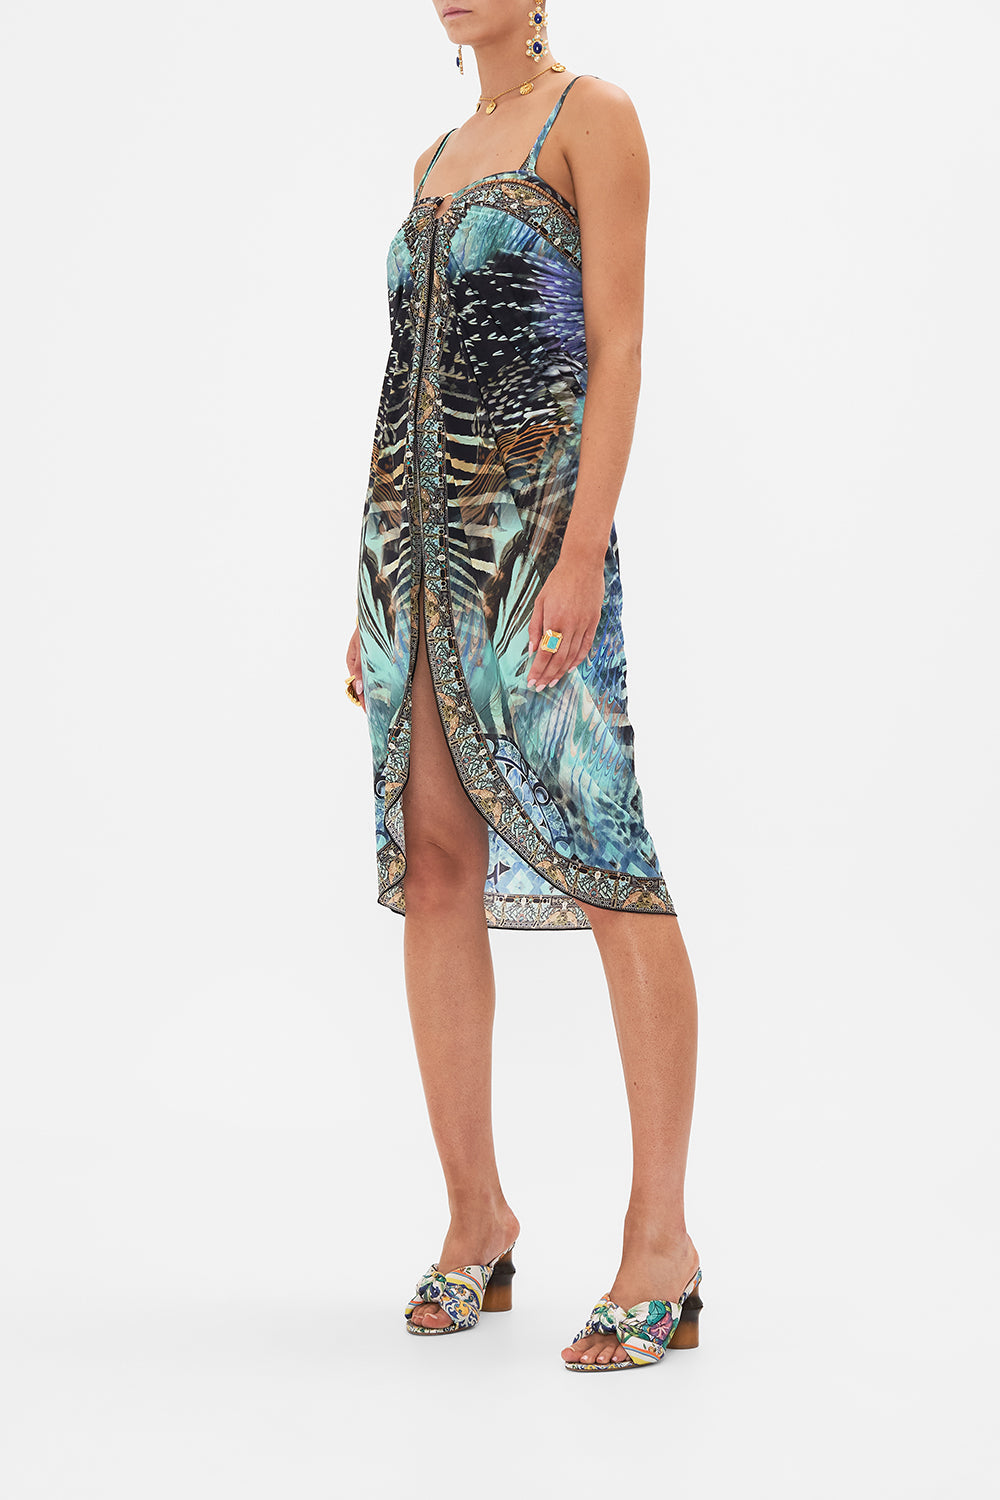 Side view of model wearing CAMILLA resortwear sarong in Azure Allure